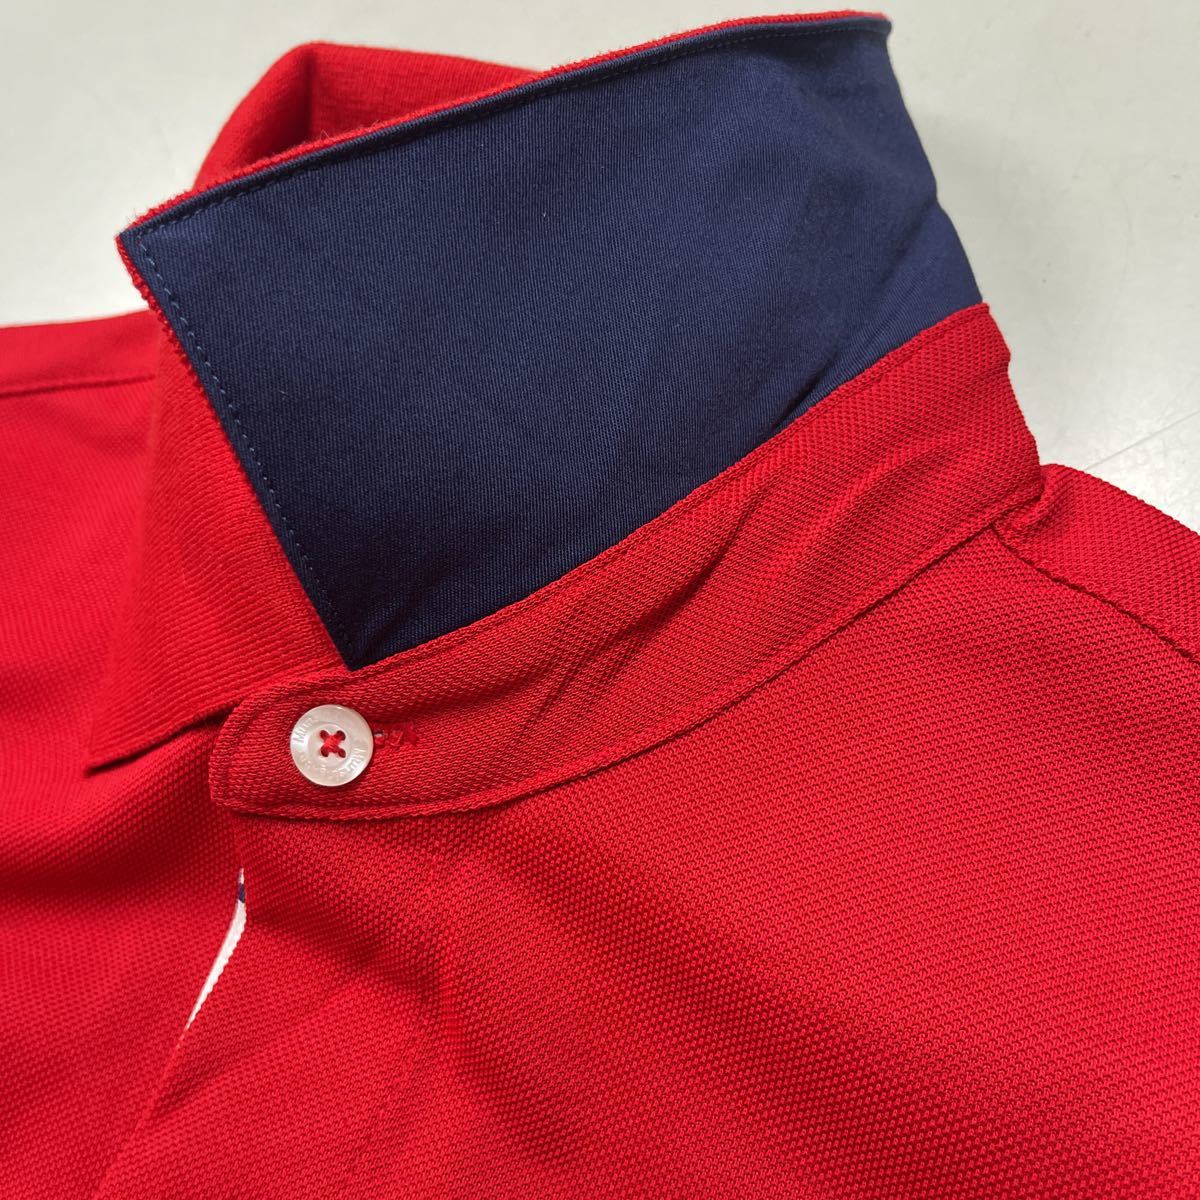 Munsingwear マンシングウェア 半袖シャツ ポロシャツ サイズL レッド 赤 メンズ トップス 日本製 MADE IN JAPAN デサント ゴルフ golfの画像10